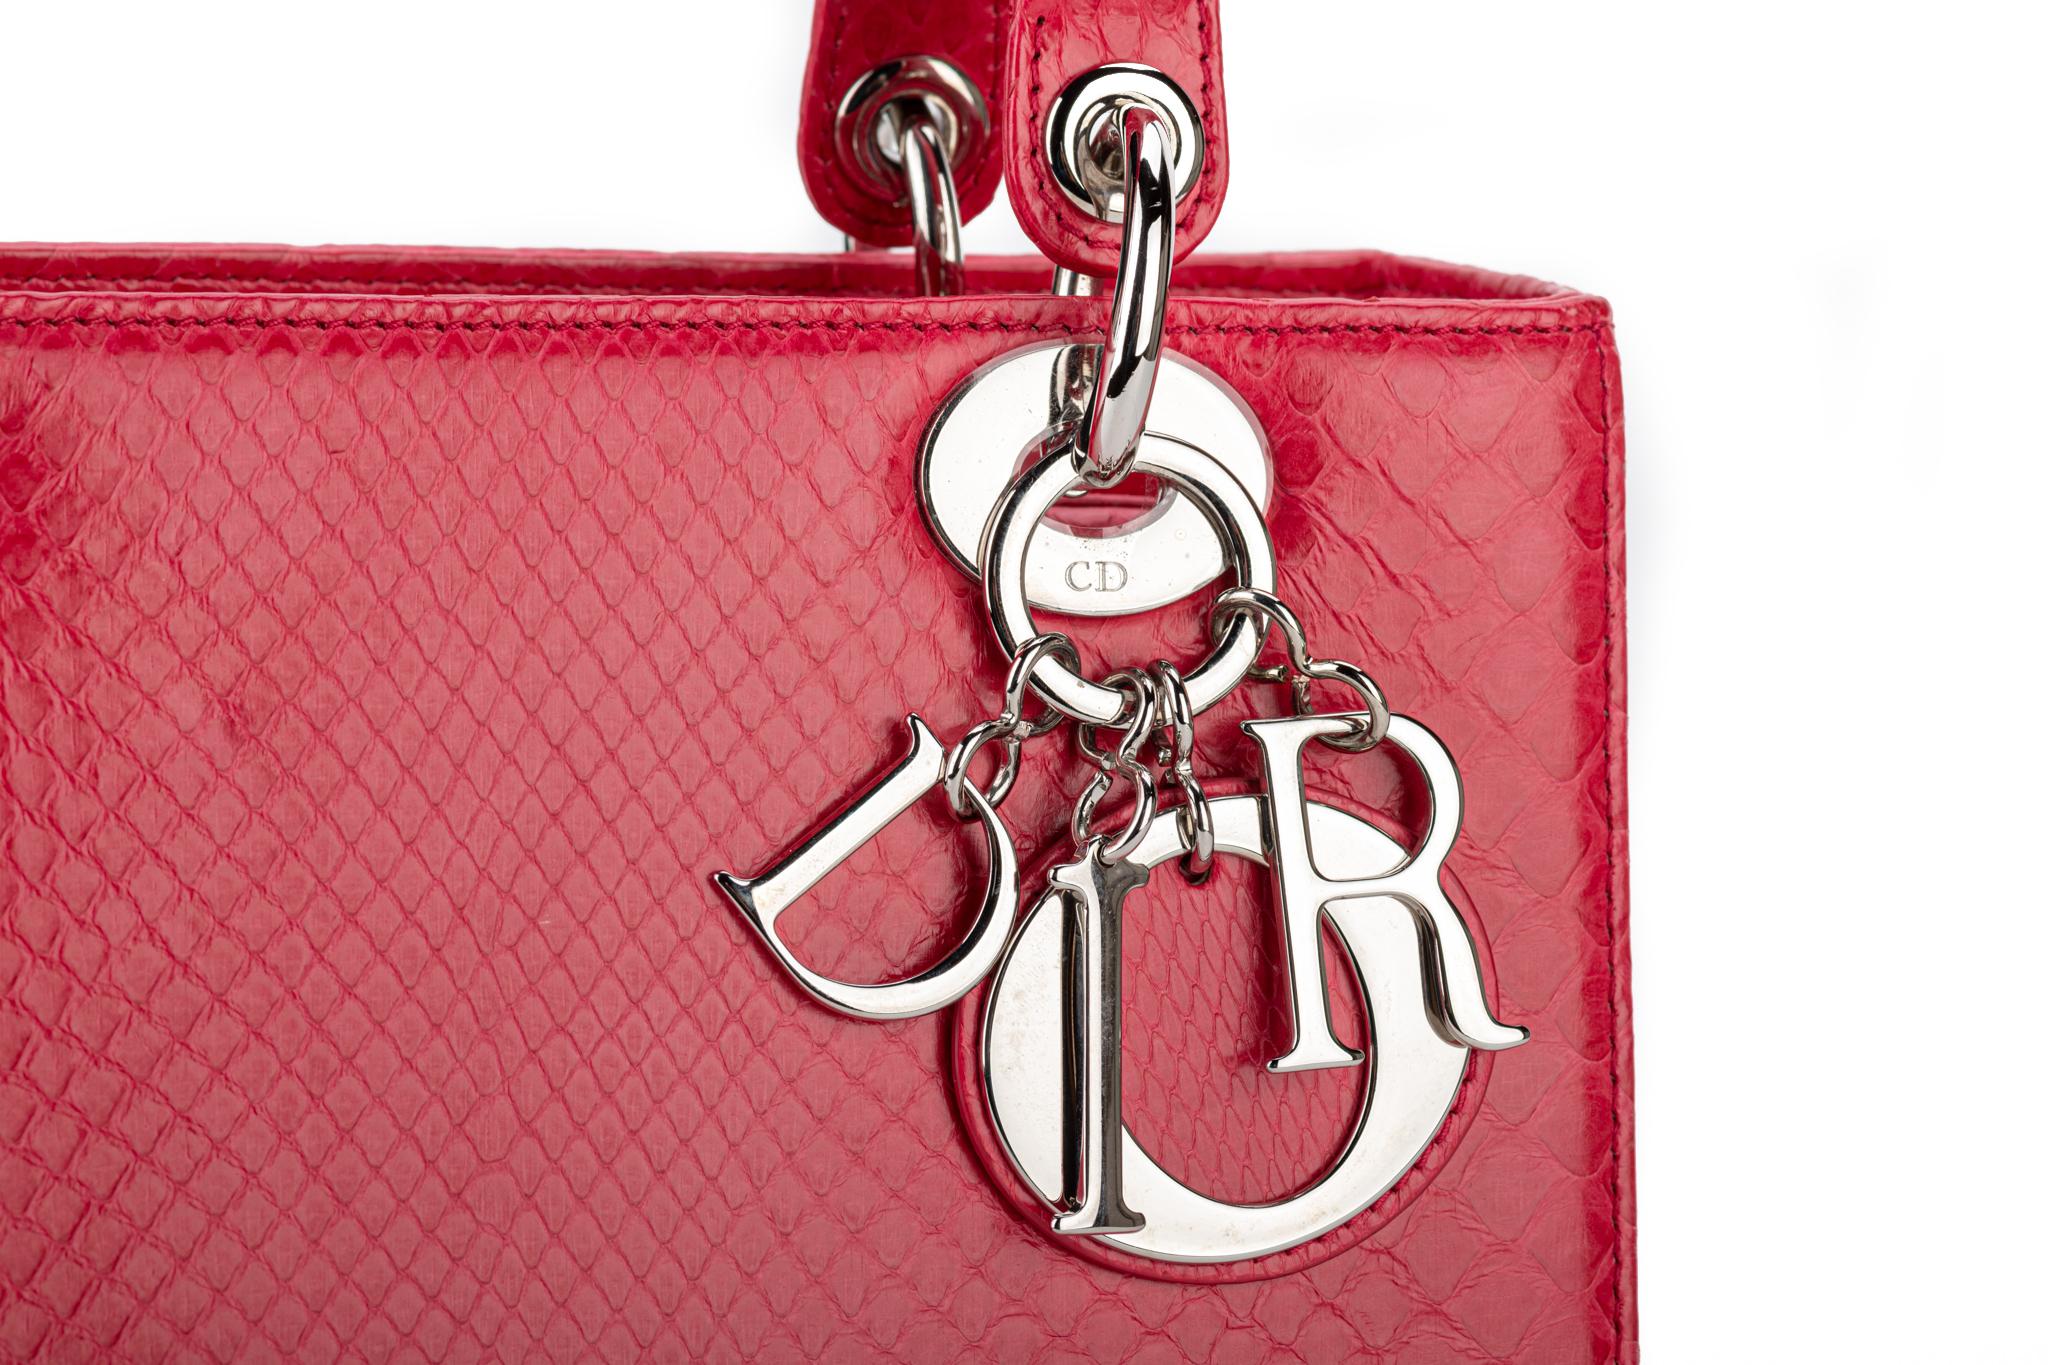  Lady Dior Large Red Python Bag For Sale 2